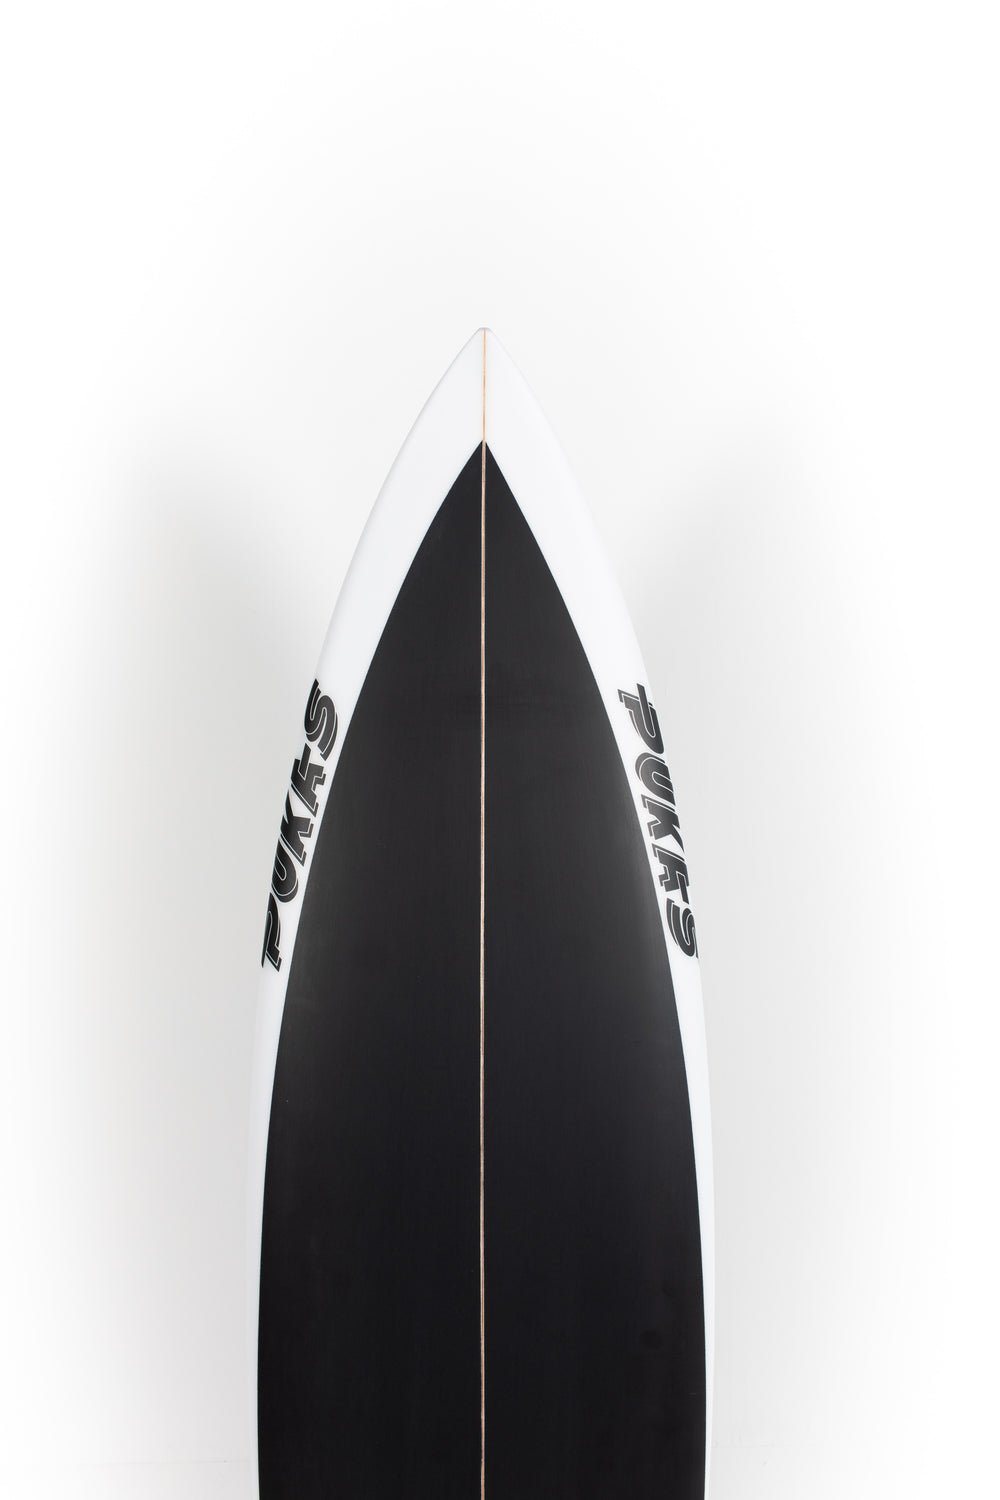 Pukas Surfboard - WATER LION ULTRA by Chris Christenson - 6'1” x 